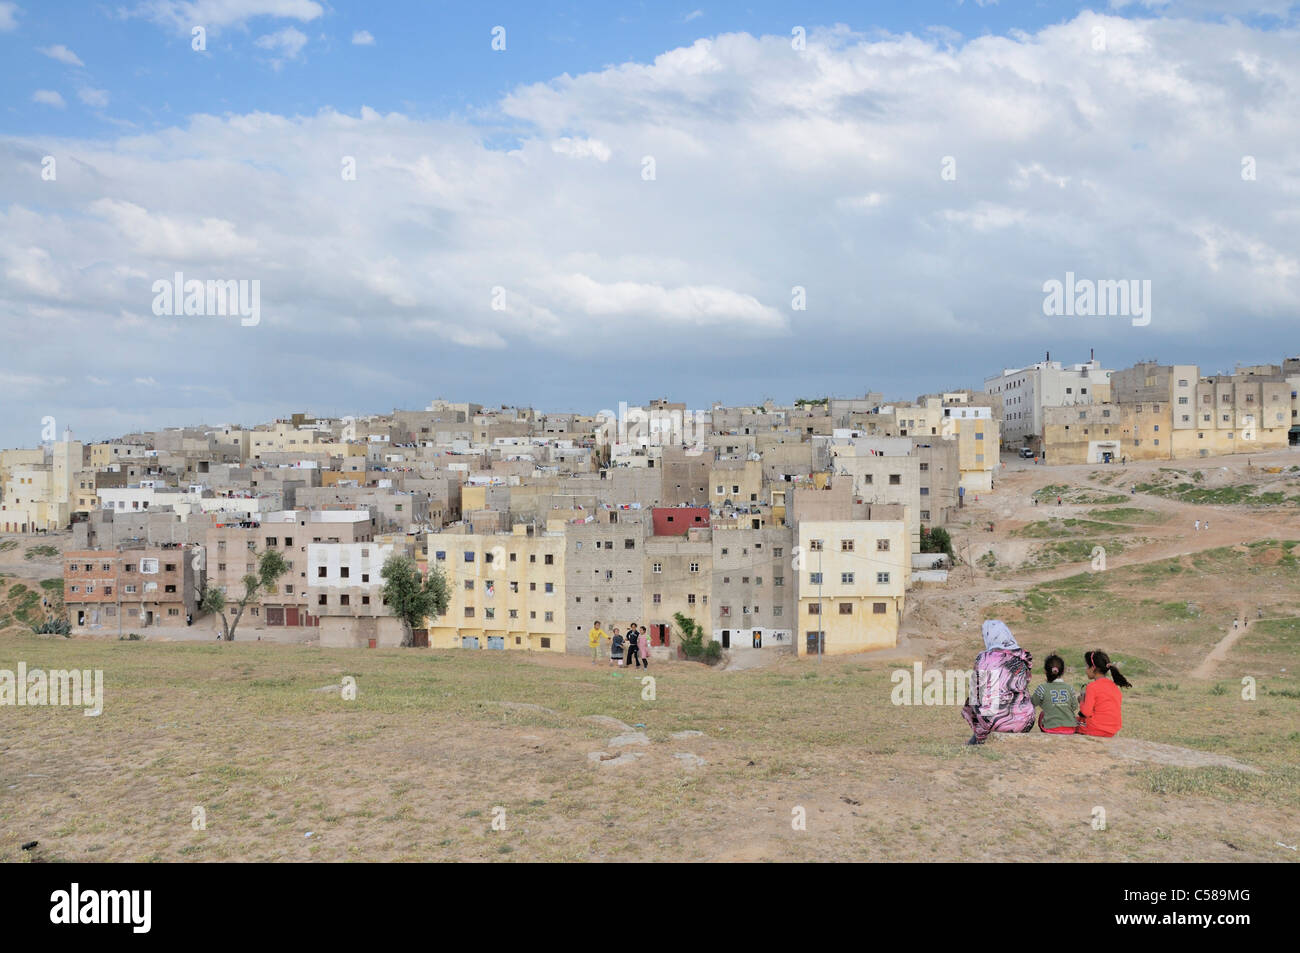 Africa, Morocco, Maghreb, North Africa, Fez, suburb, housing development, children, Stock Photo